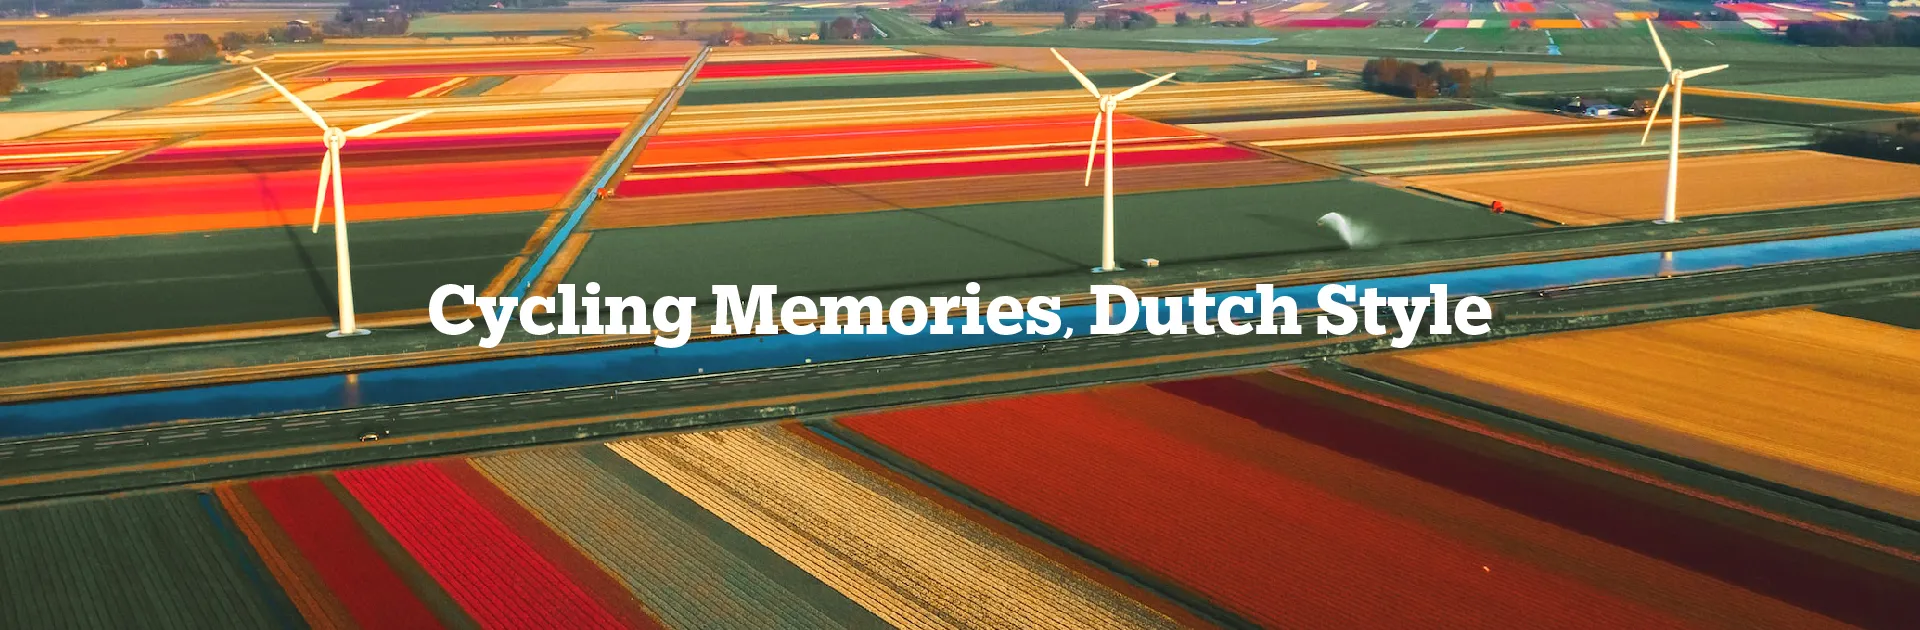 Cycling Memories, Dutch Style